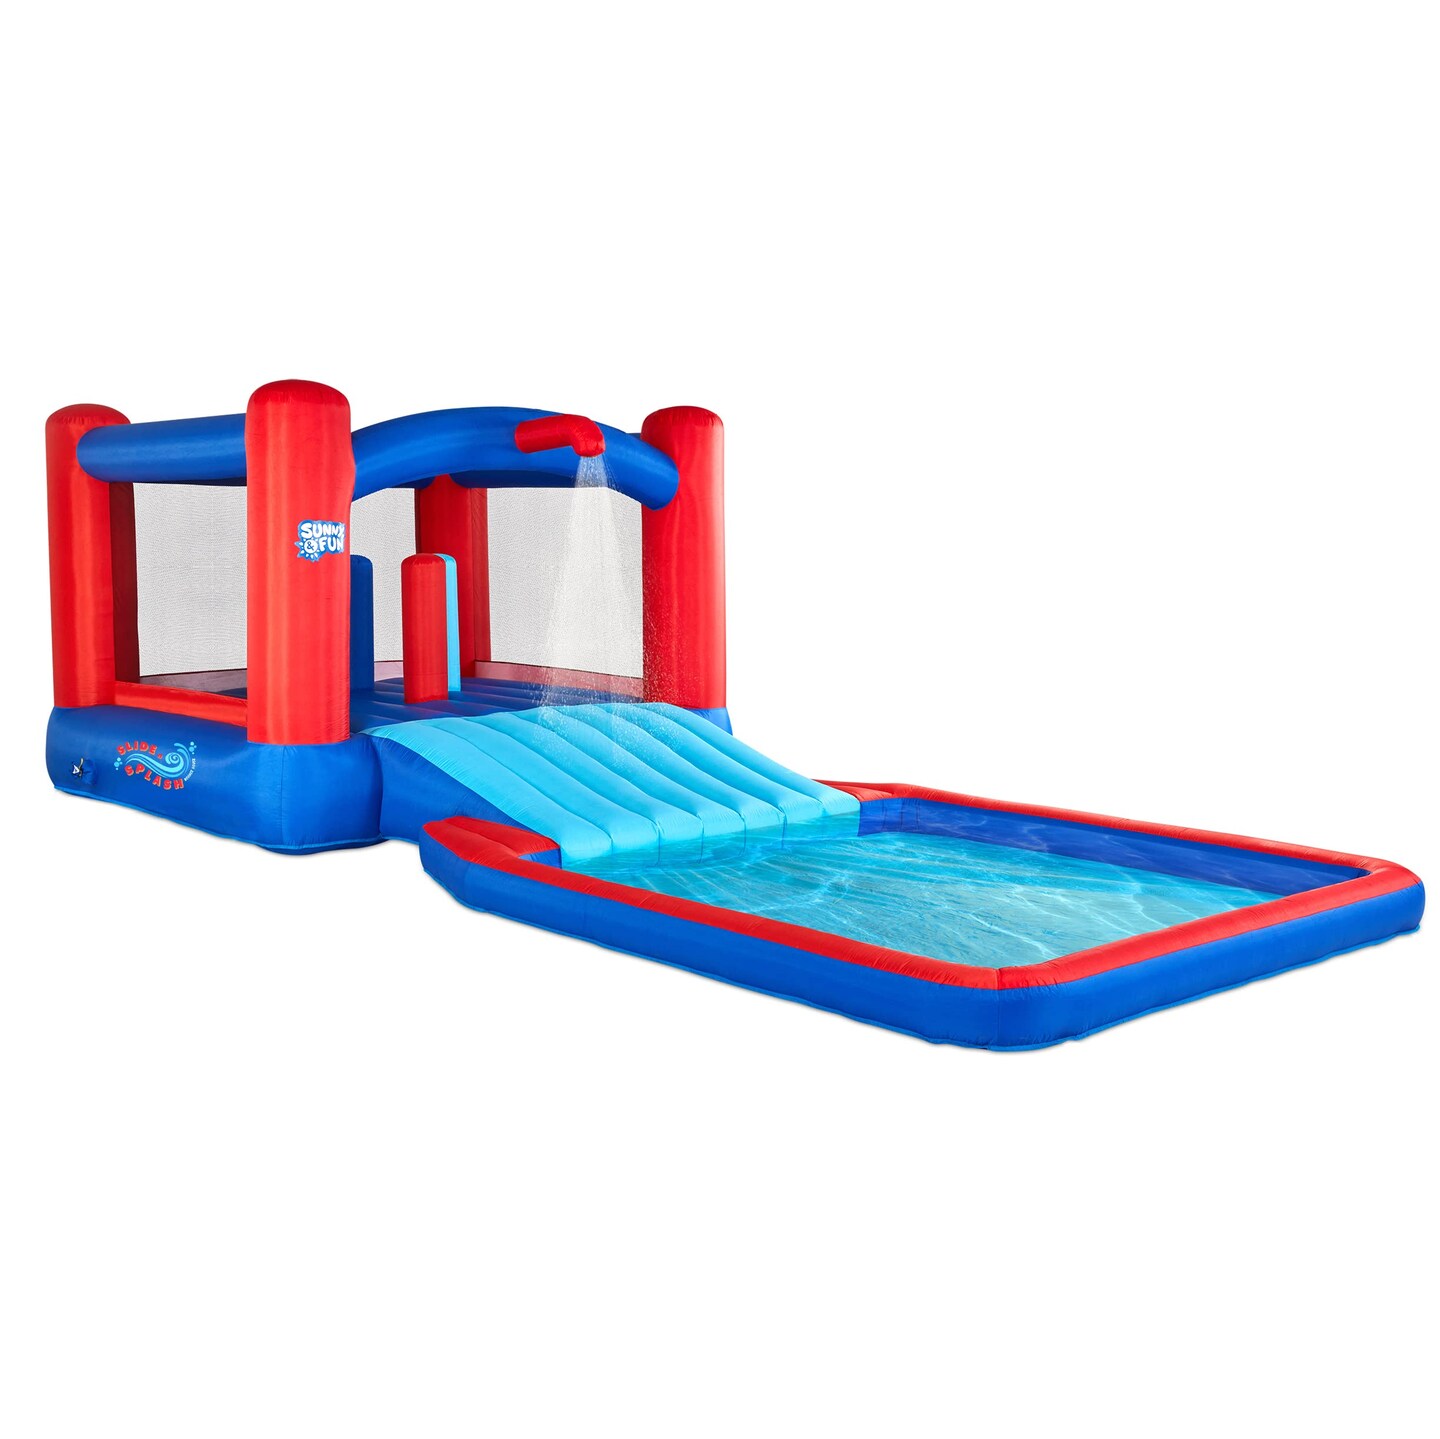 Sunny &#x26; Fun Inflatable Kids Backyard Water Slide Park &#x26; Bounce House